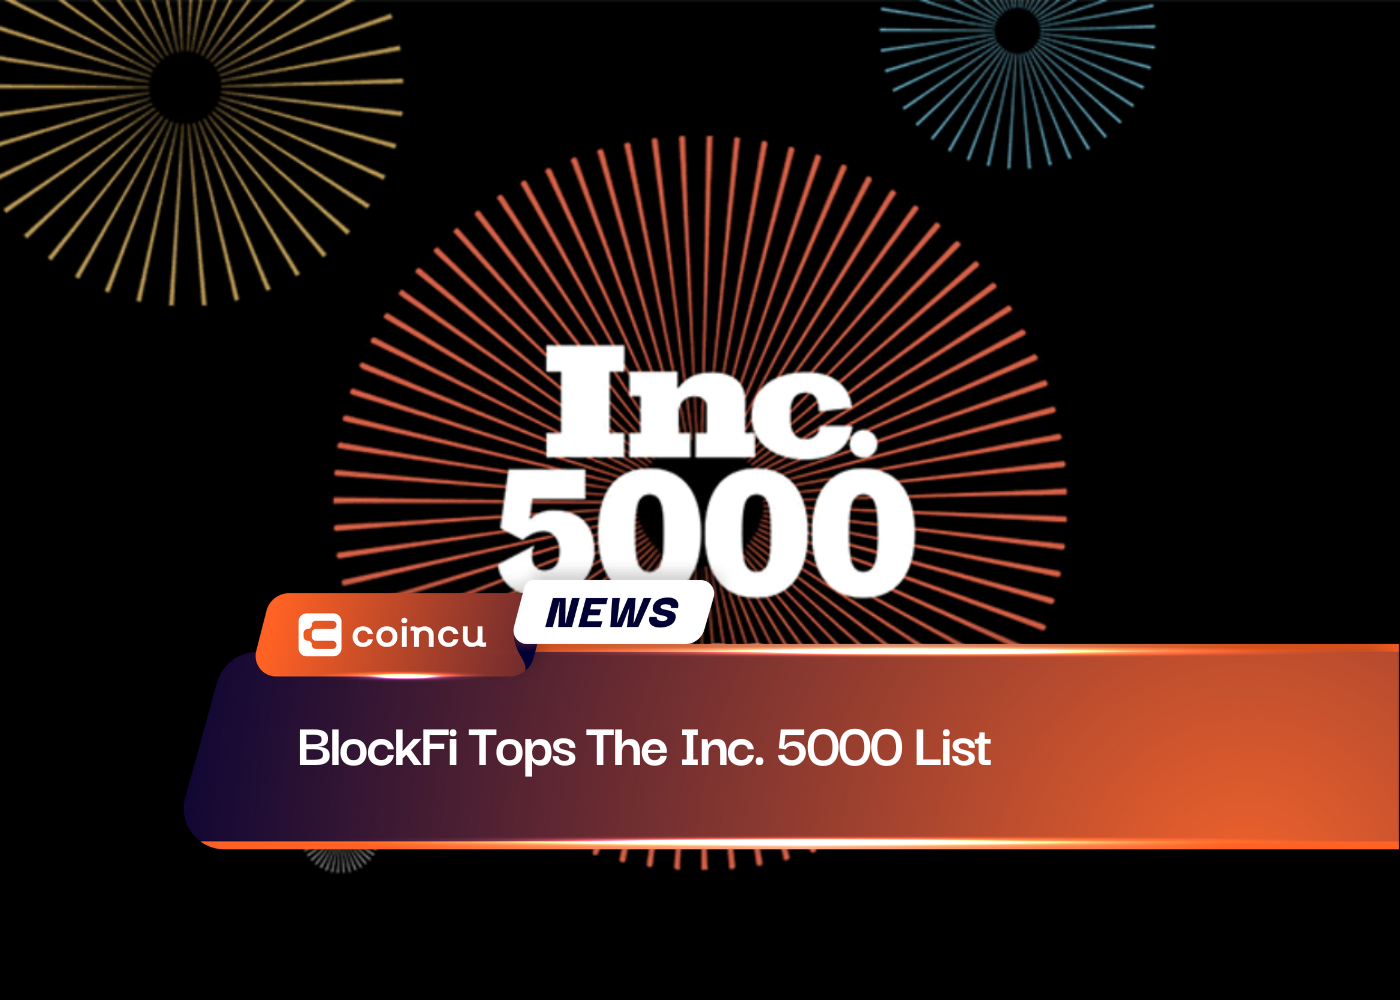 BlockFi Tops The Inc. 5000 List